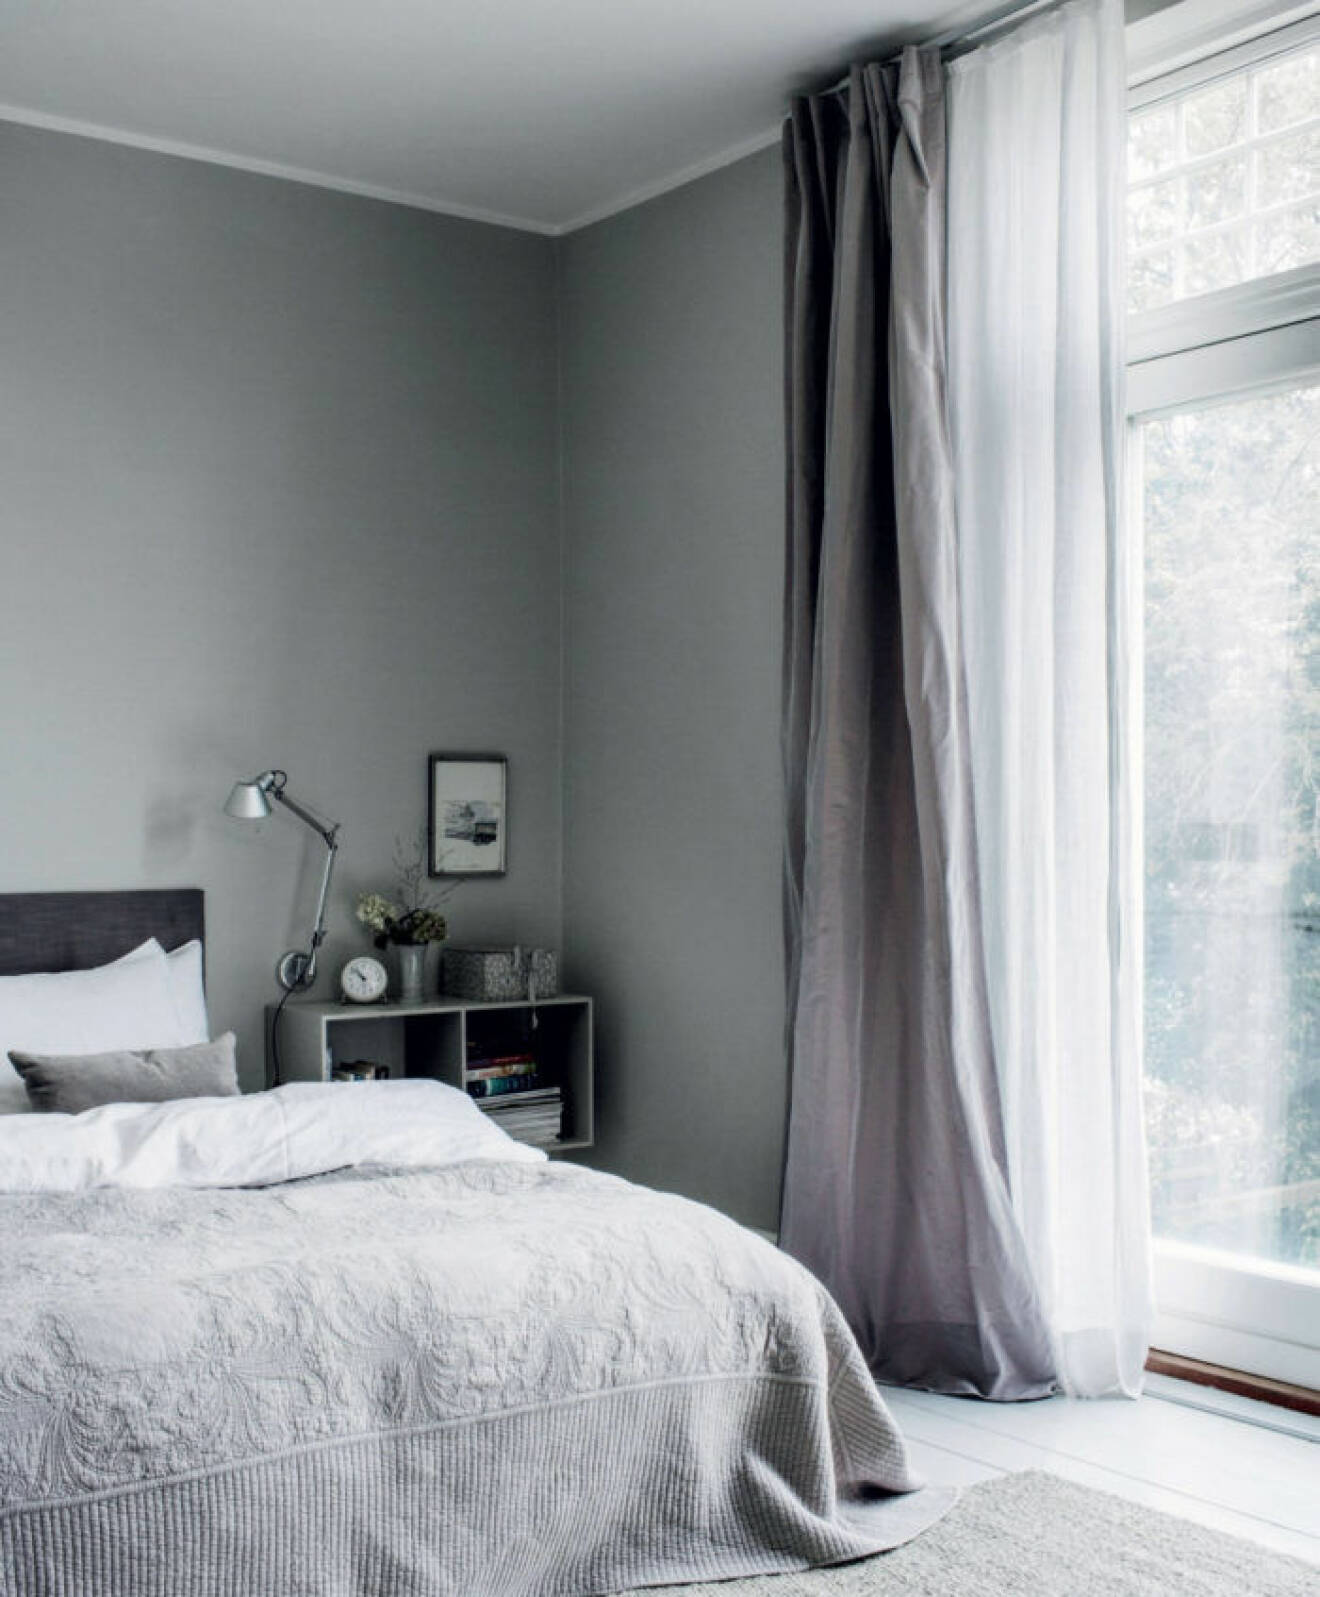 Sovrum med gardiner som har fint fall